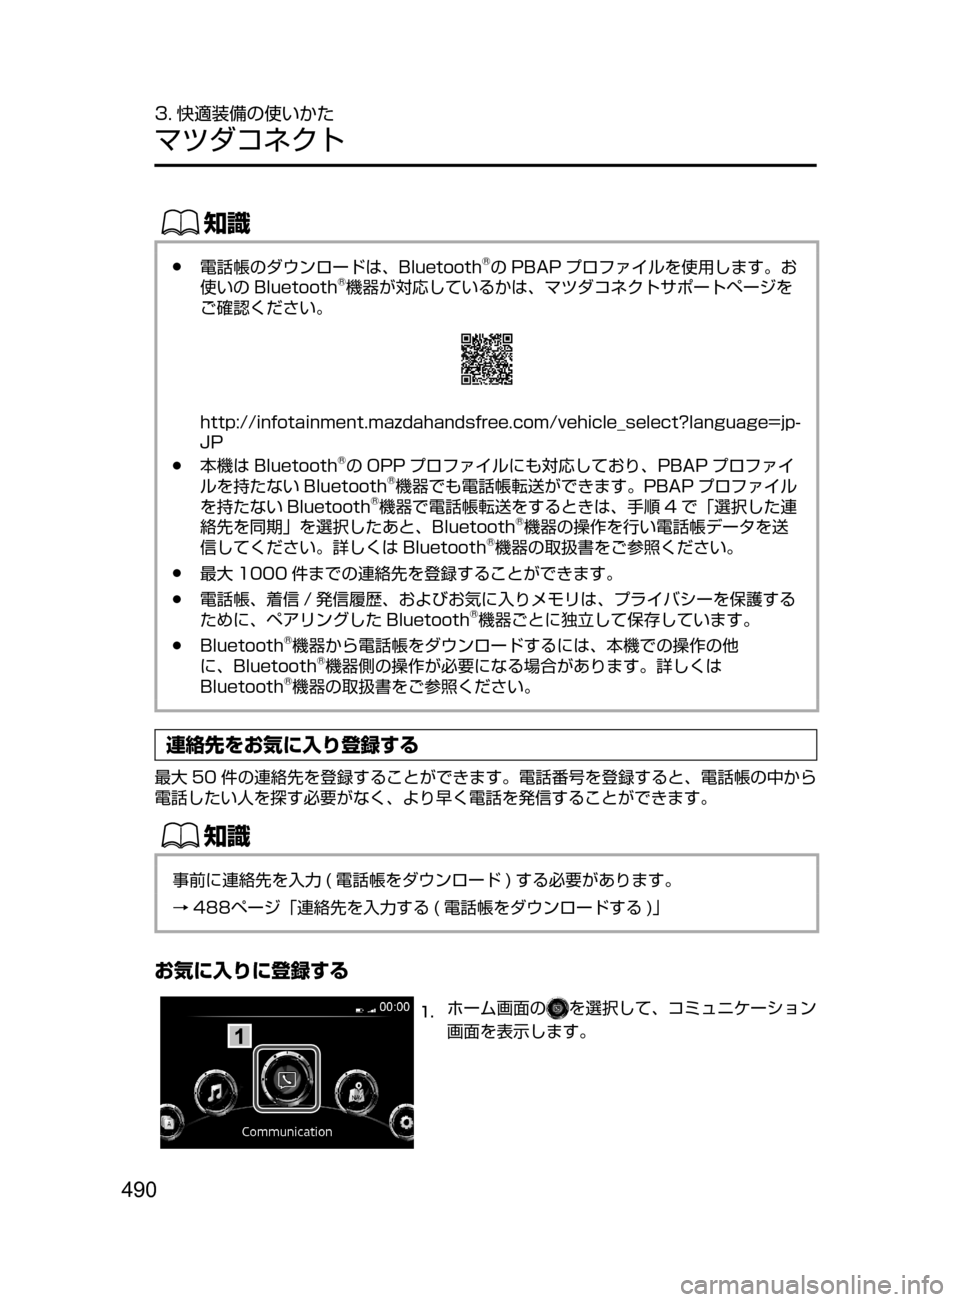 MAZDA MODEL CX-5 2017  取扱説明書 (in Japanese) 490
3. 快適装備の使いかた
マツダコネクト
ŒÝ
﻿﻿●電話帳のダウンロードは､ Bluetooth®の PBAP プロファイルを使用します。お
使いの Bluetooth®機器